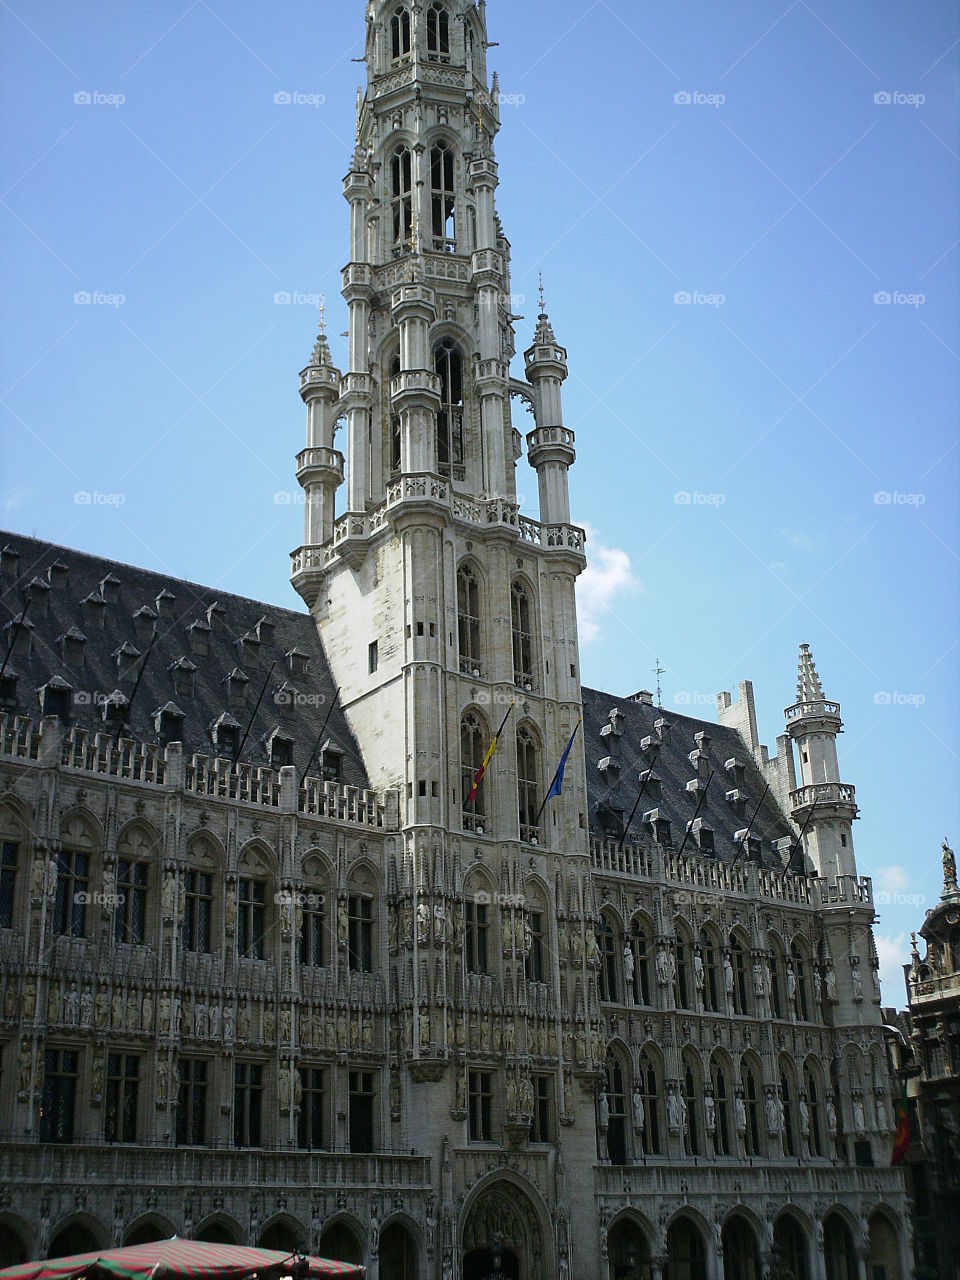 Cathedral in Belgium